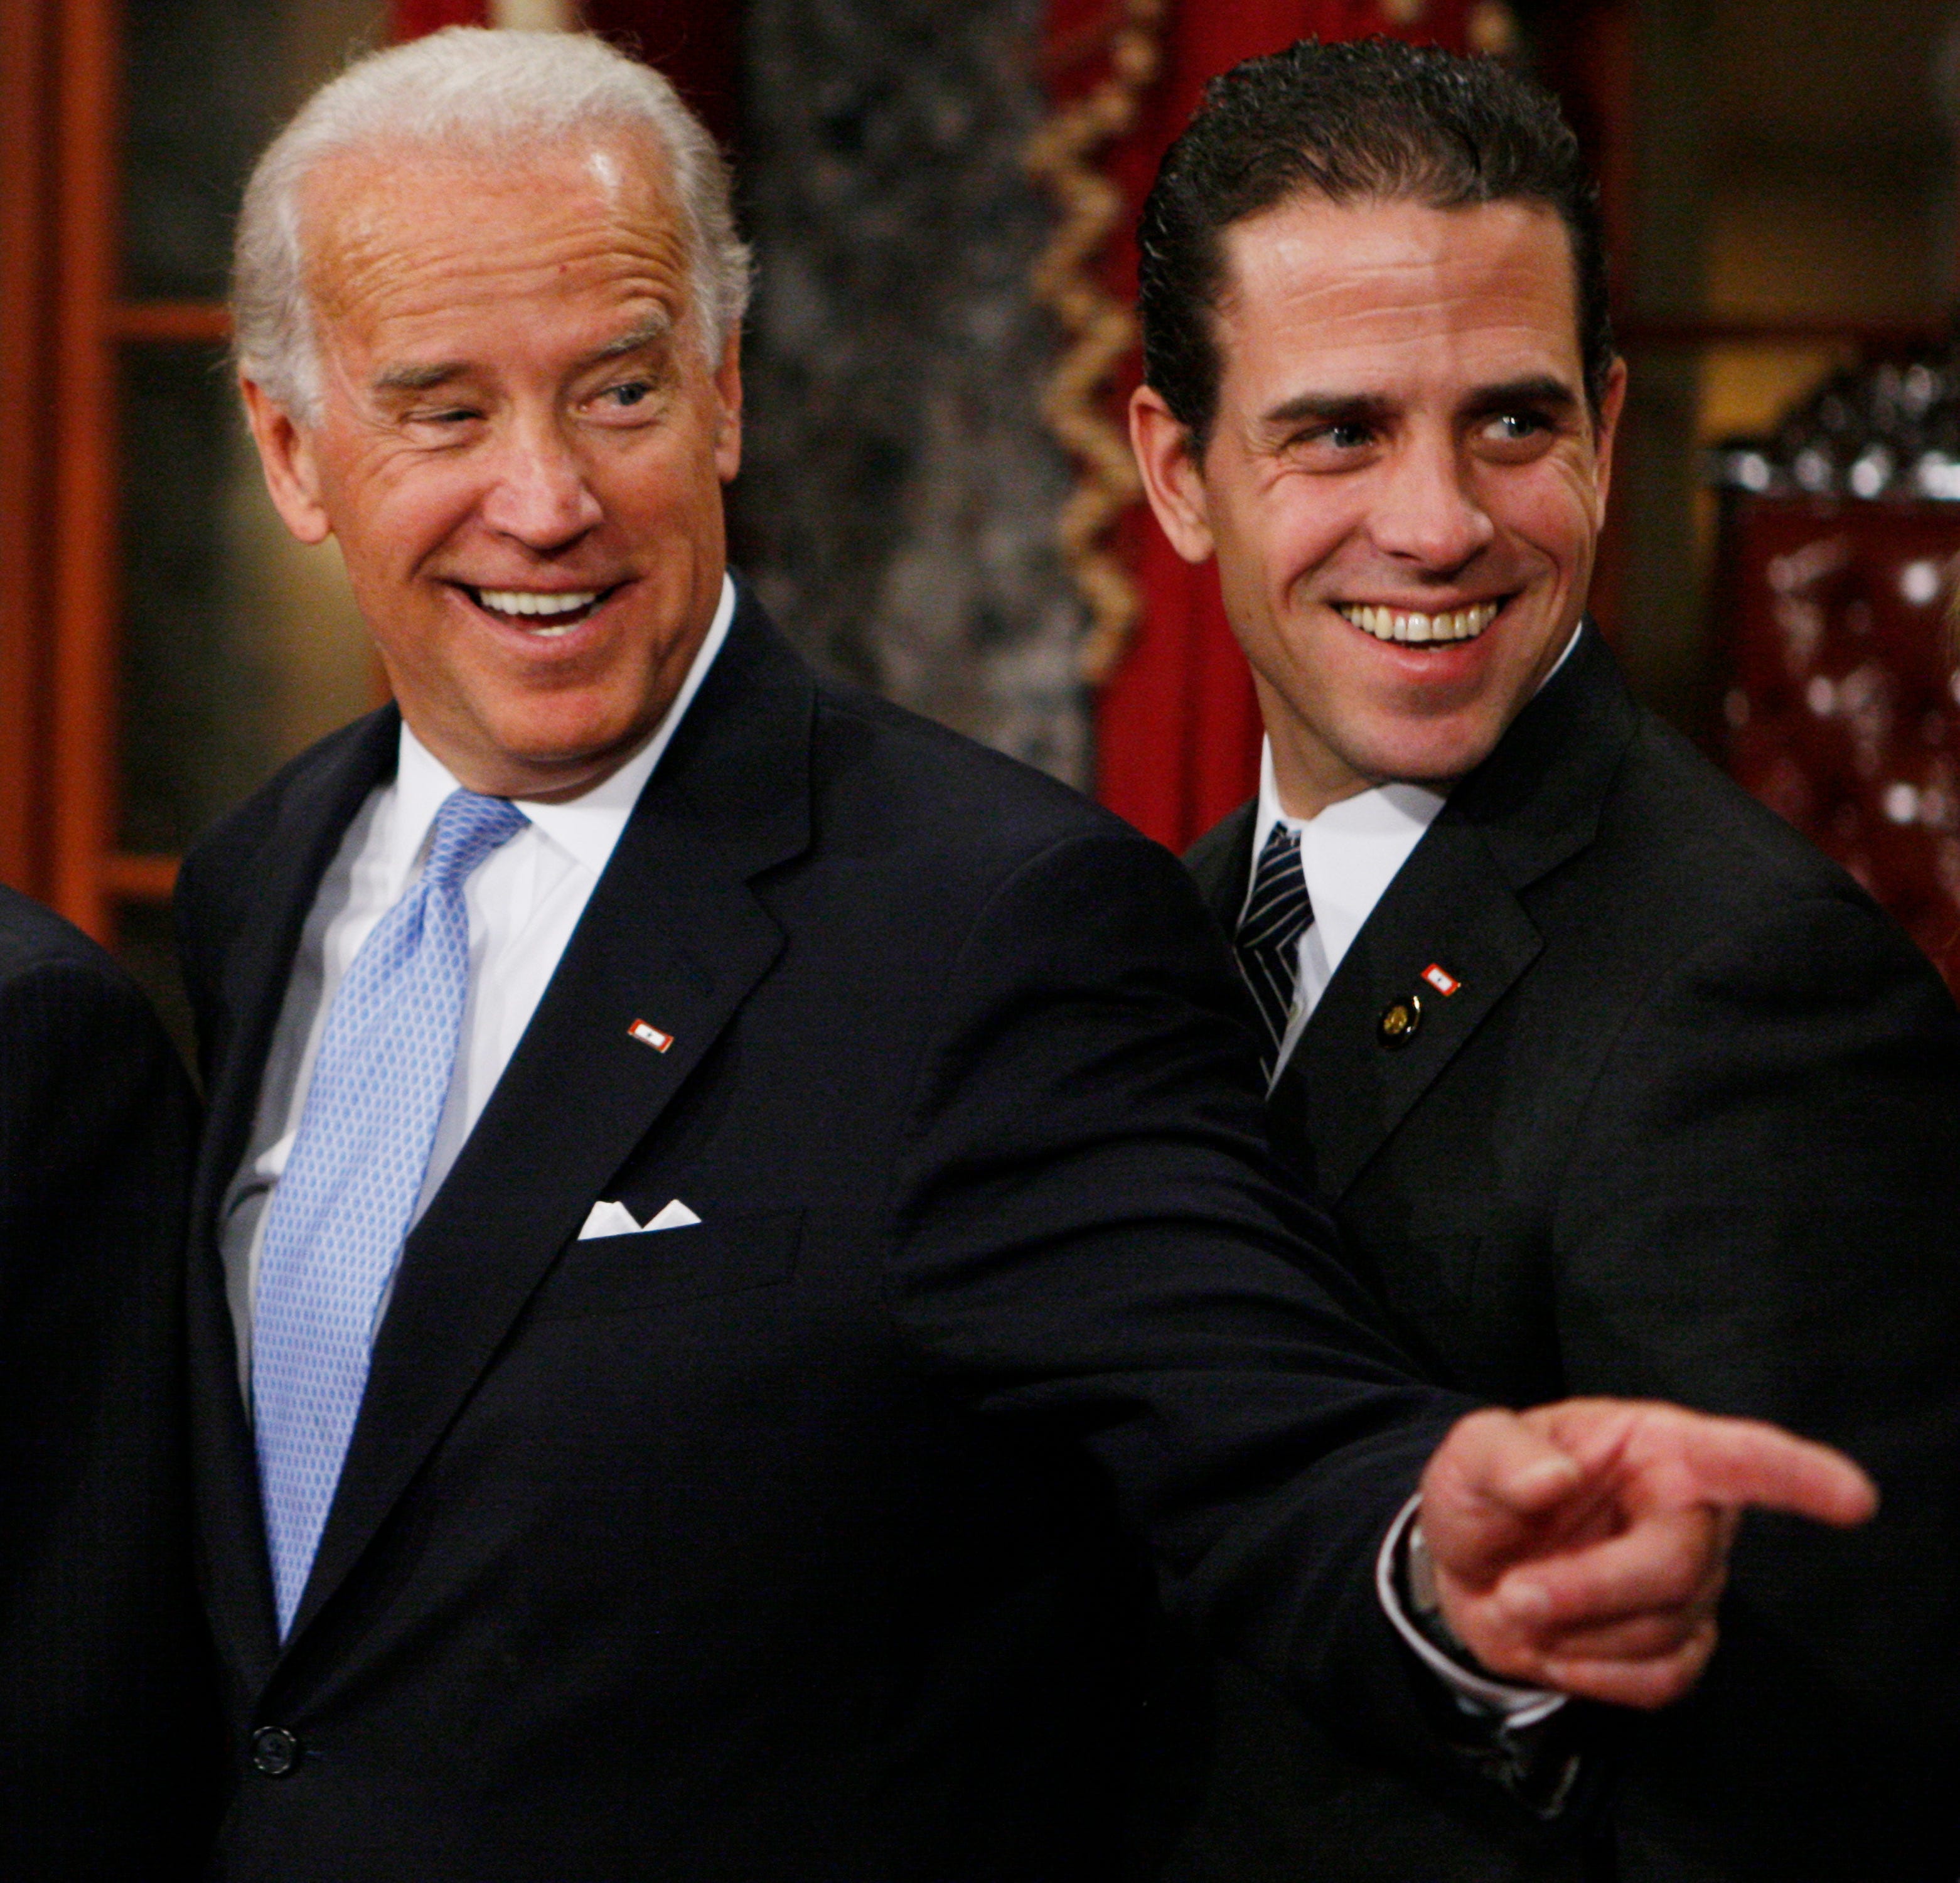 Democratic presidential nominee Joe Biden and his son Hunter Biden on Jan. 6, 2009, in Washington, D.C.